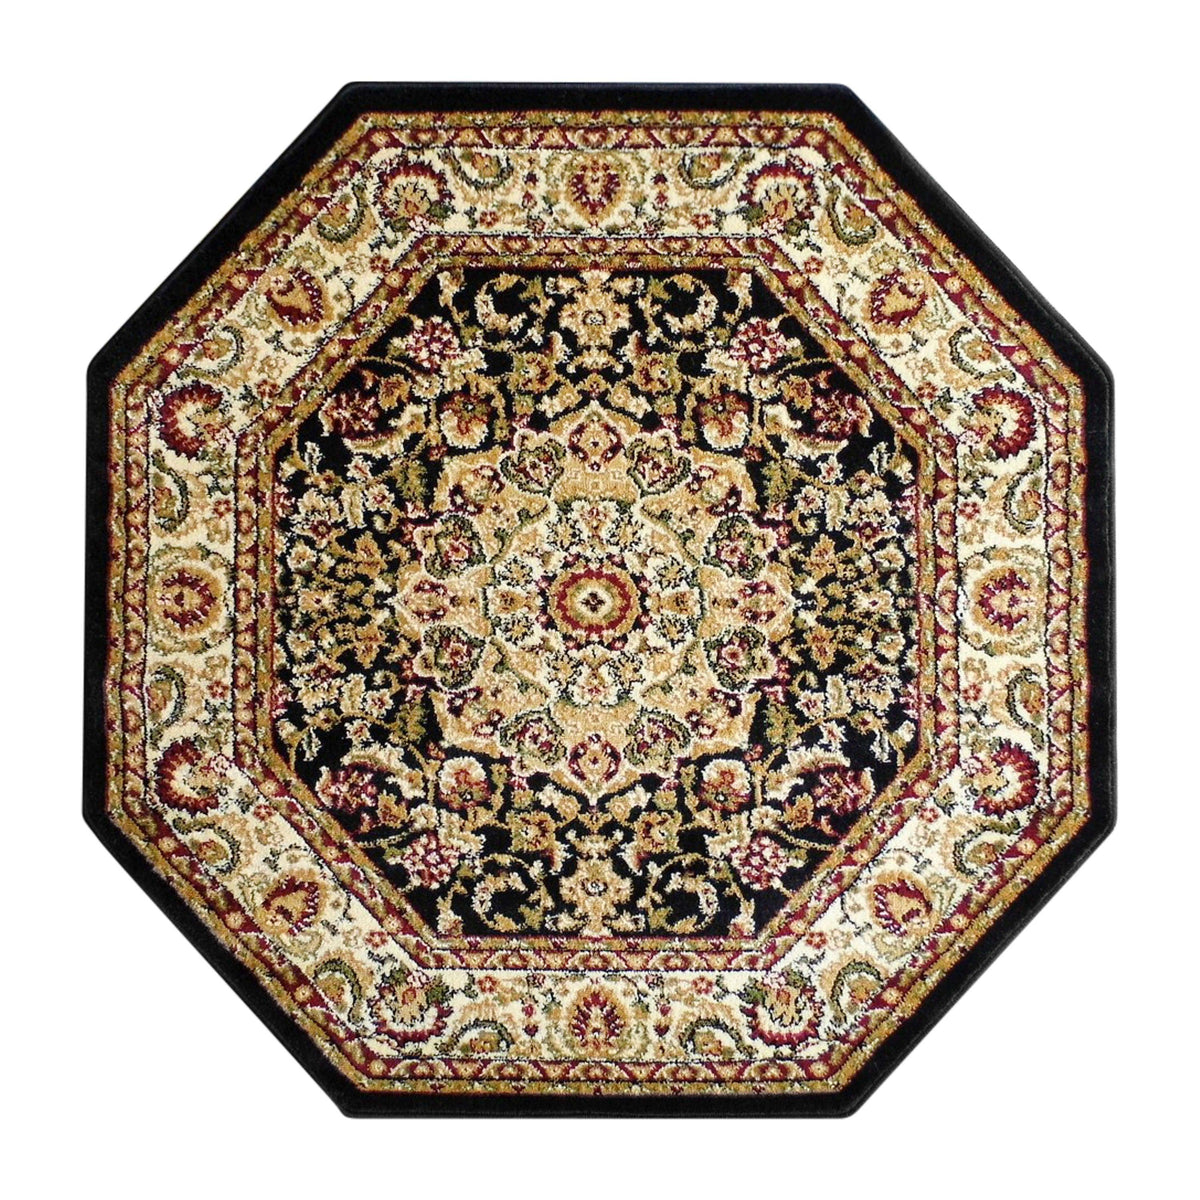 Black,5' Octagon |#| Multipurpose Black Persian Style Olefin Medallion Motif Area Rug - 5x5 Octagon